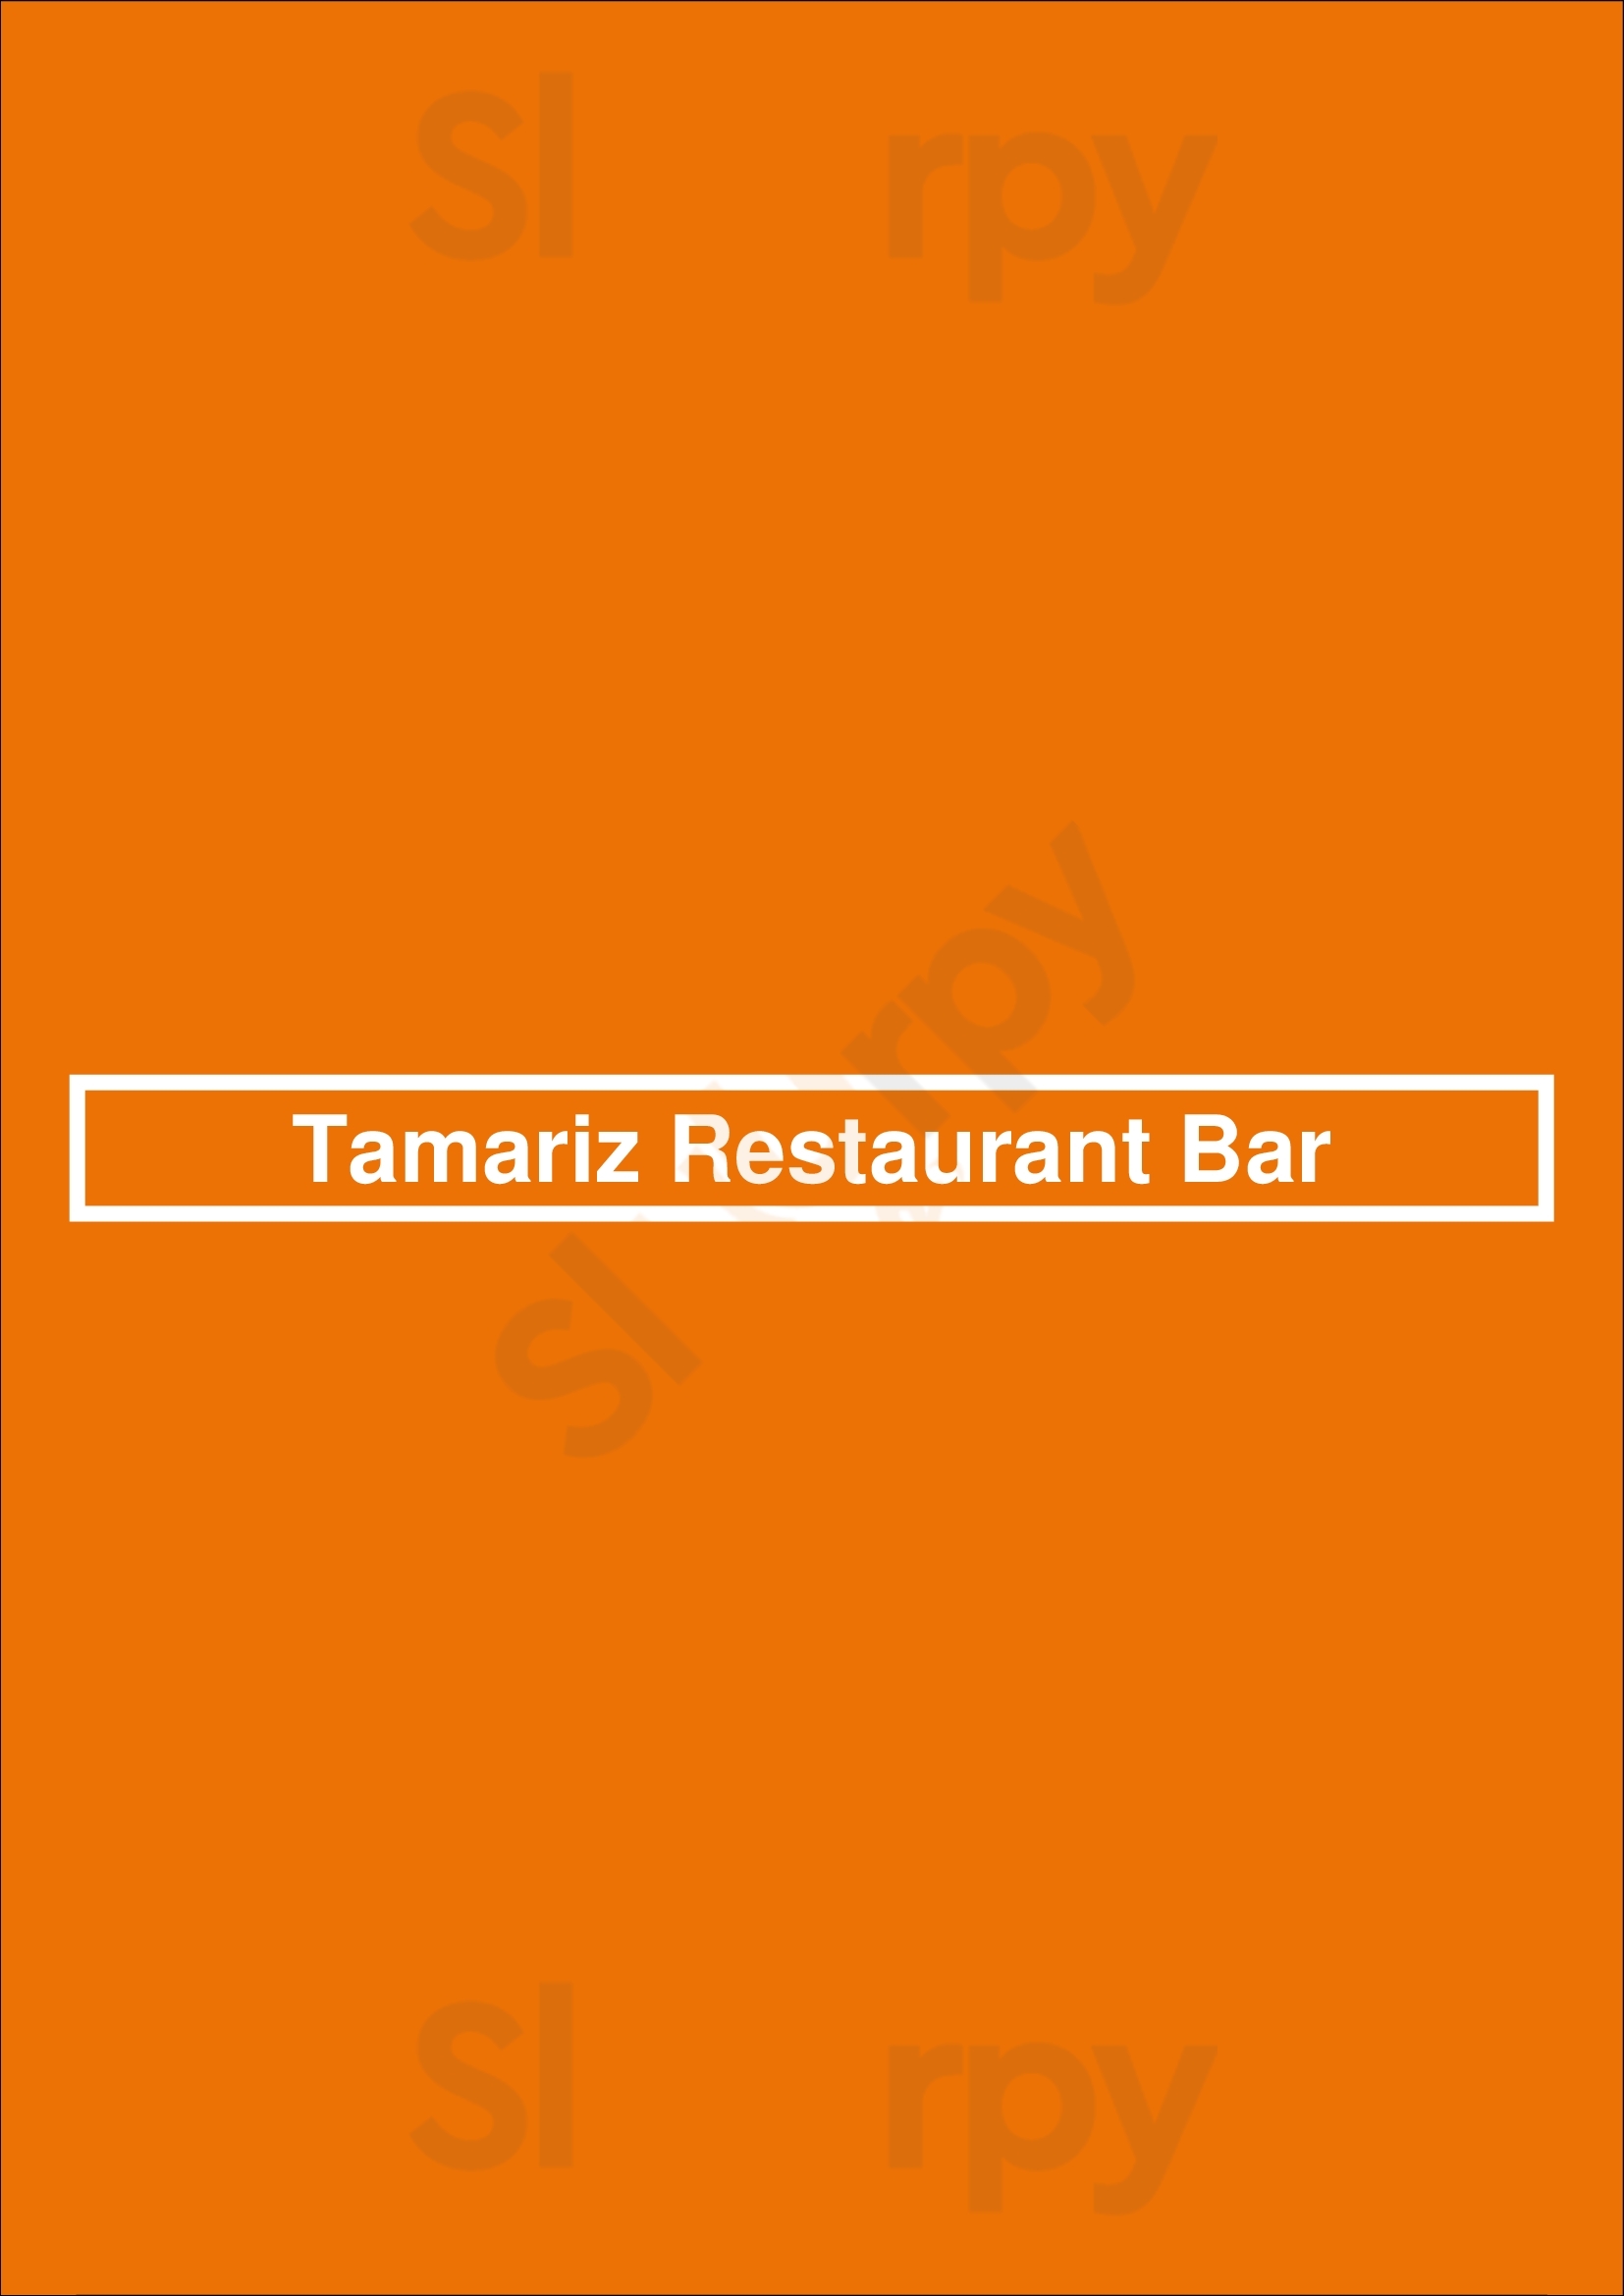 Tamariz Restaurant Bar Estoril Menu - 1